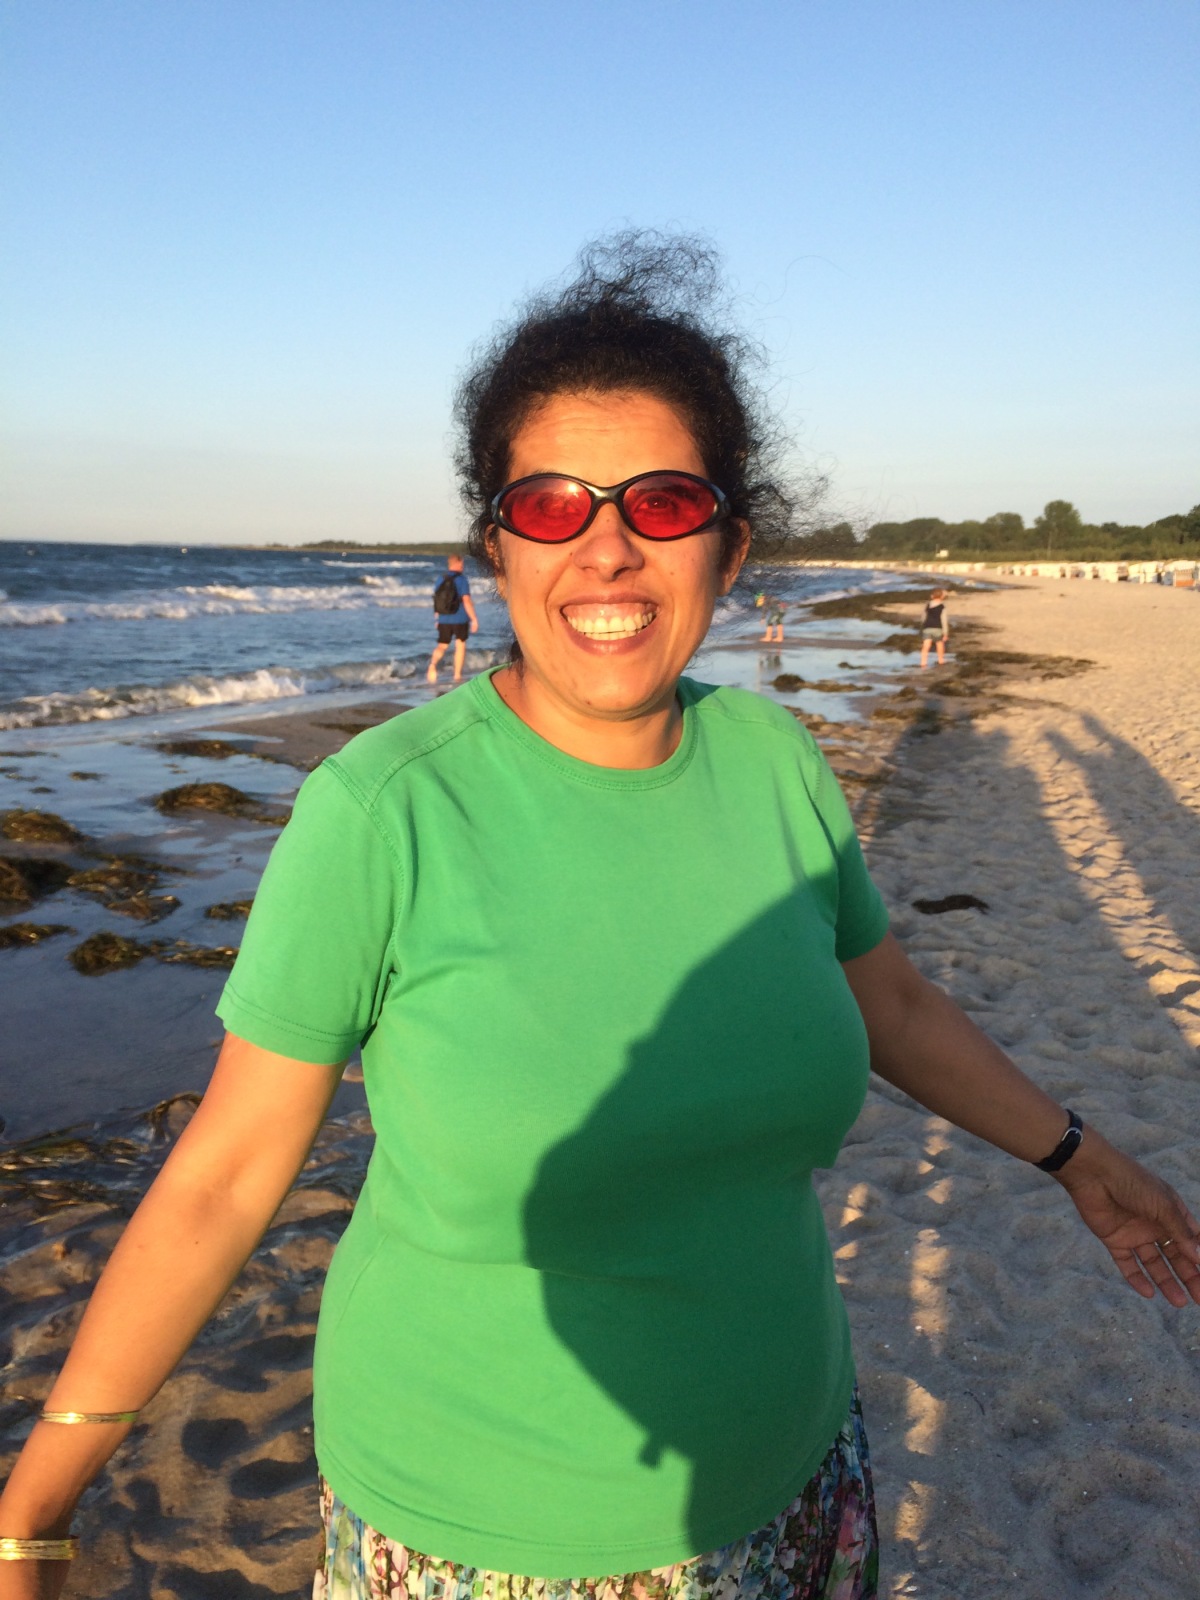 Lydia am Strand mit grünem T-Shirt und buntem Rock